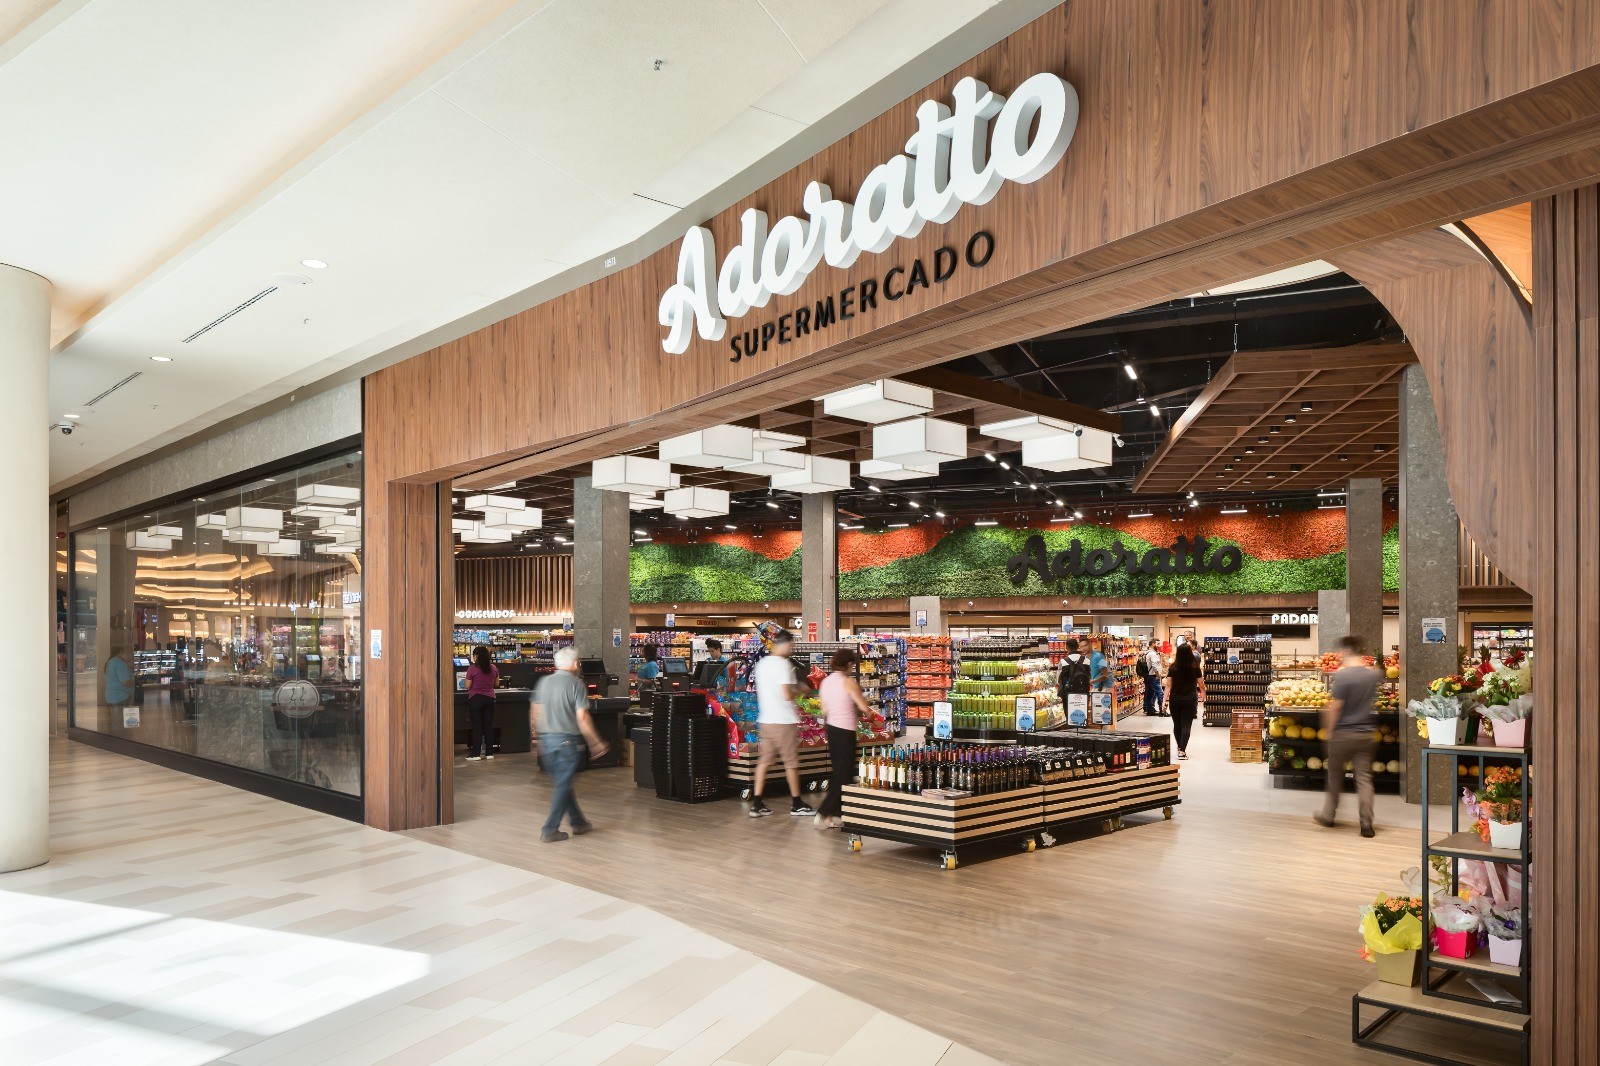 Adoratto Supermercado abre primeira loja no Jockey Plaza Shopping